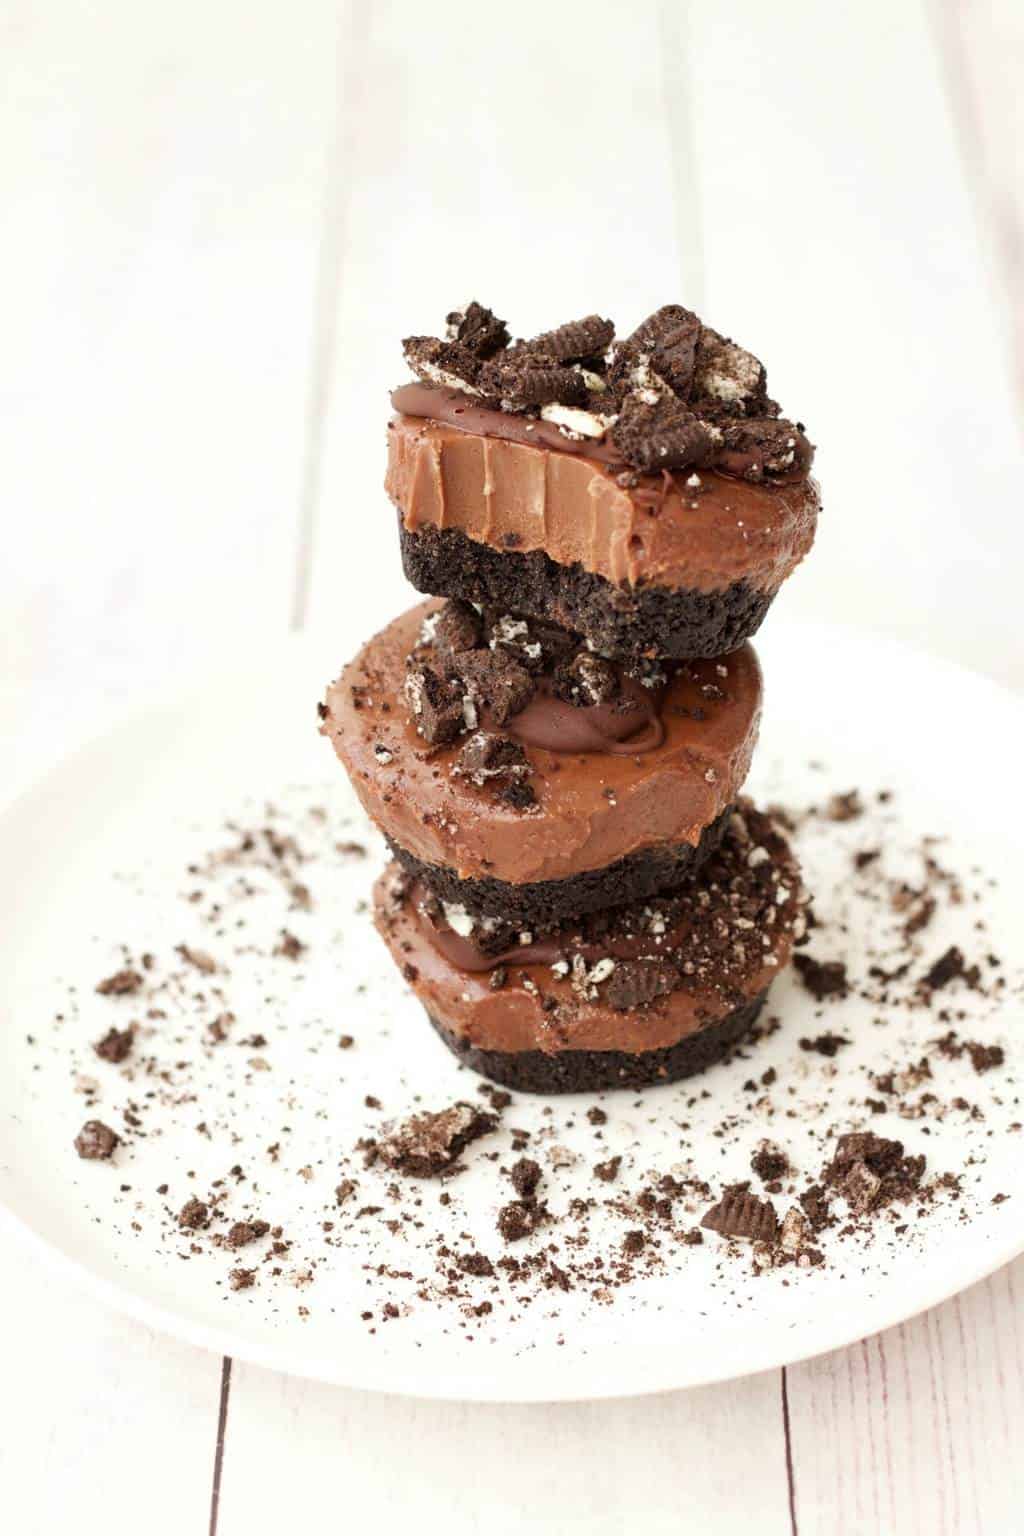 Mini Vegan Choklad Cheesecakes # vegan #lovingitvegan #cheesecakes #dessert #dairyfree #oreos